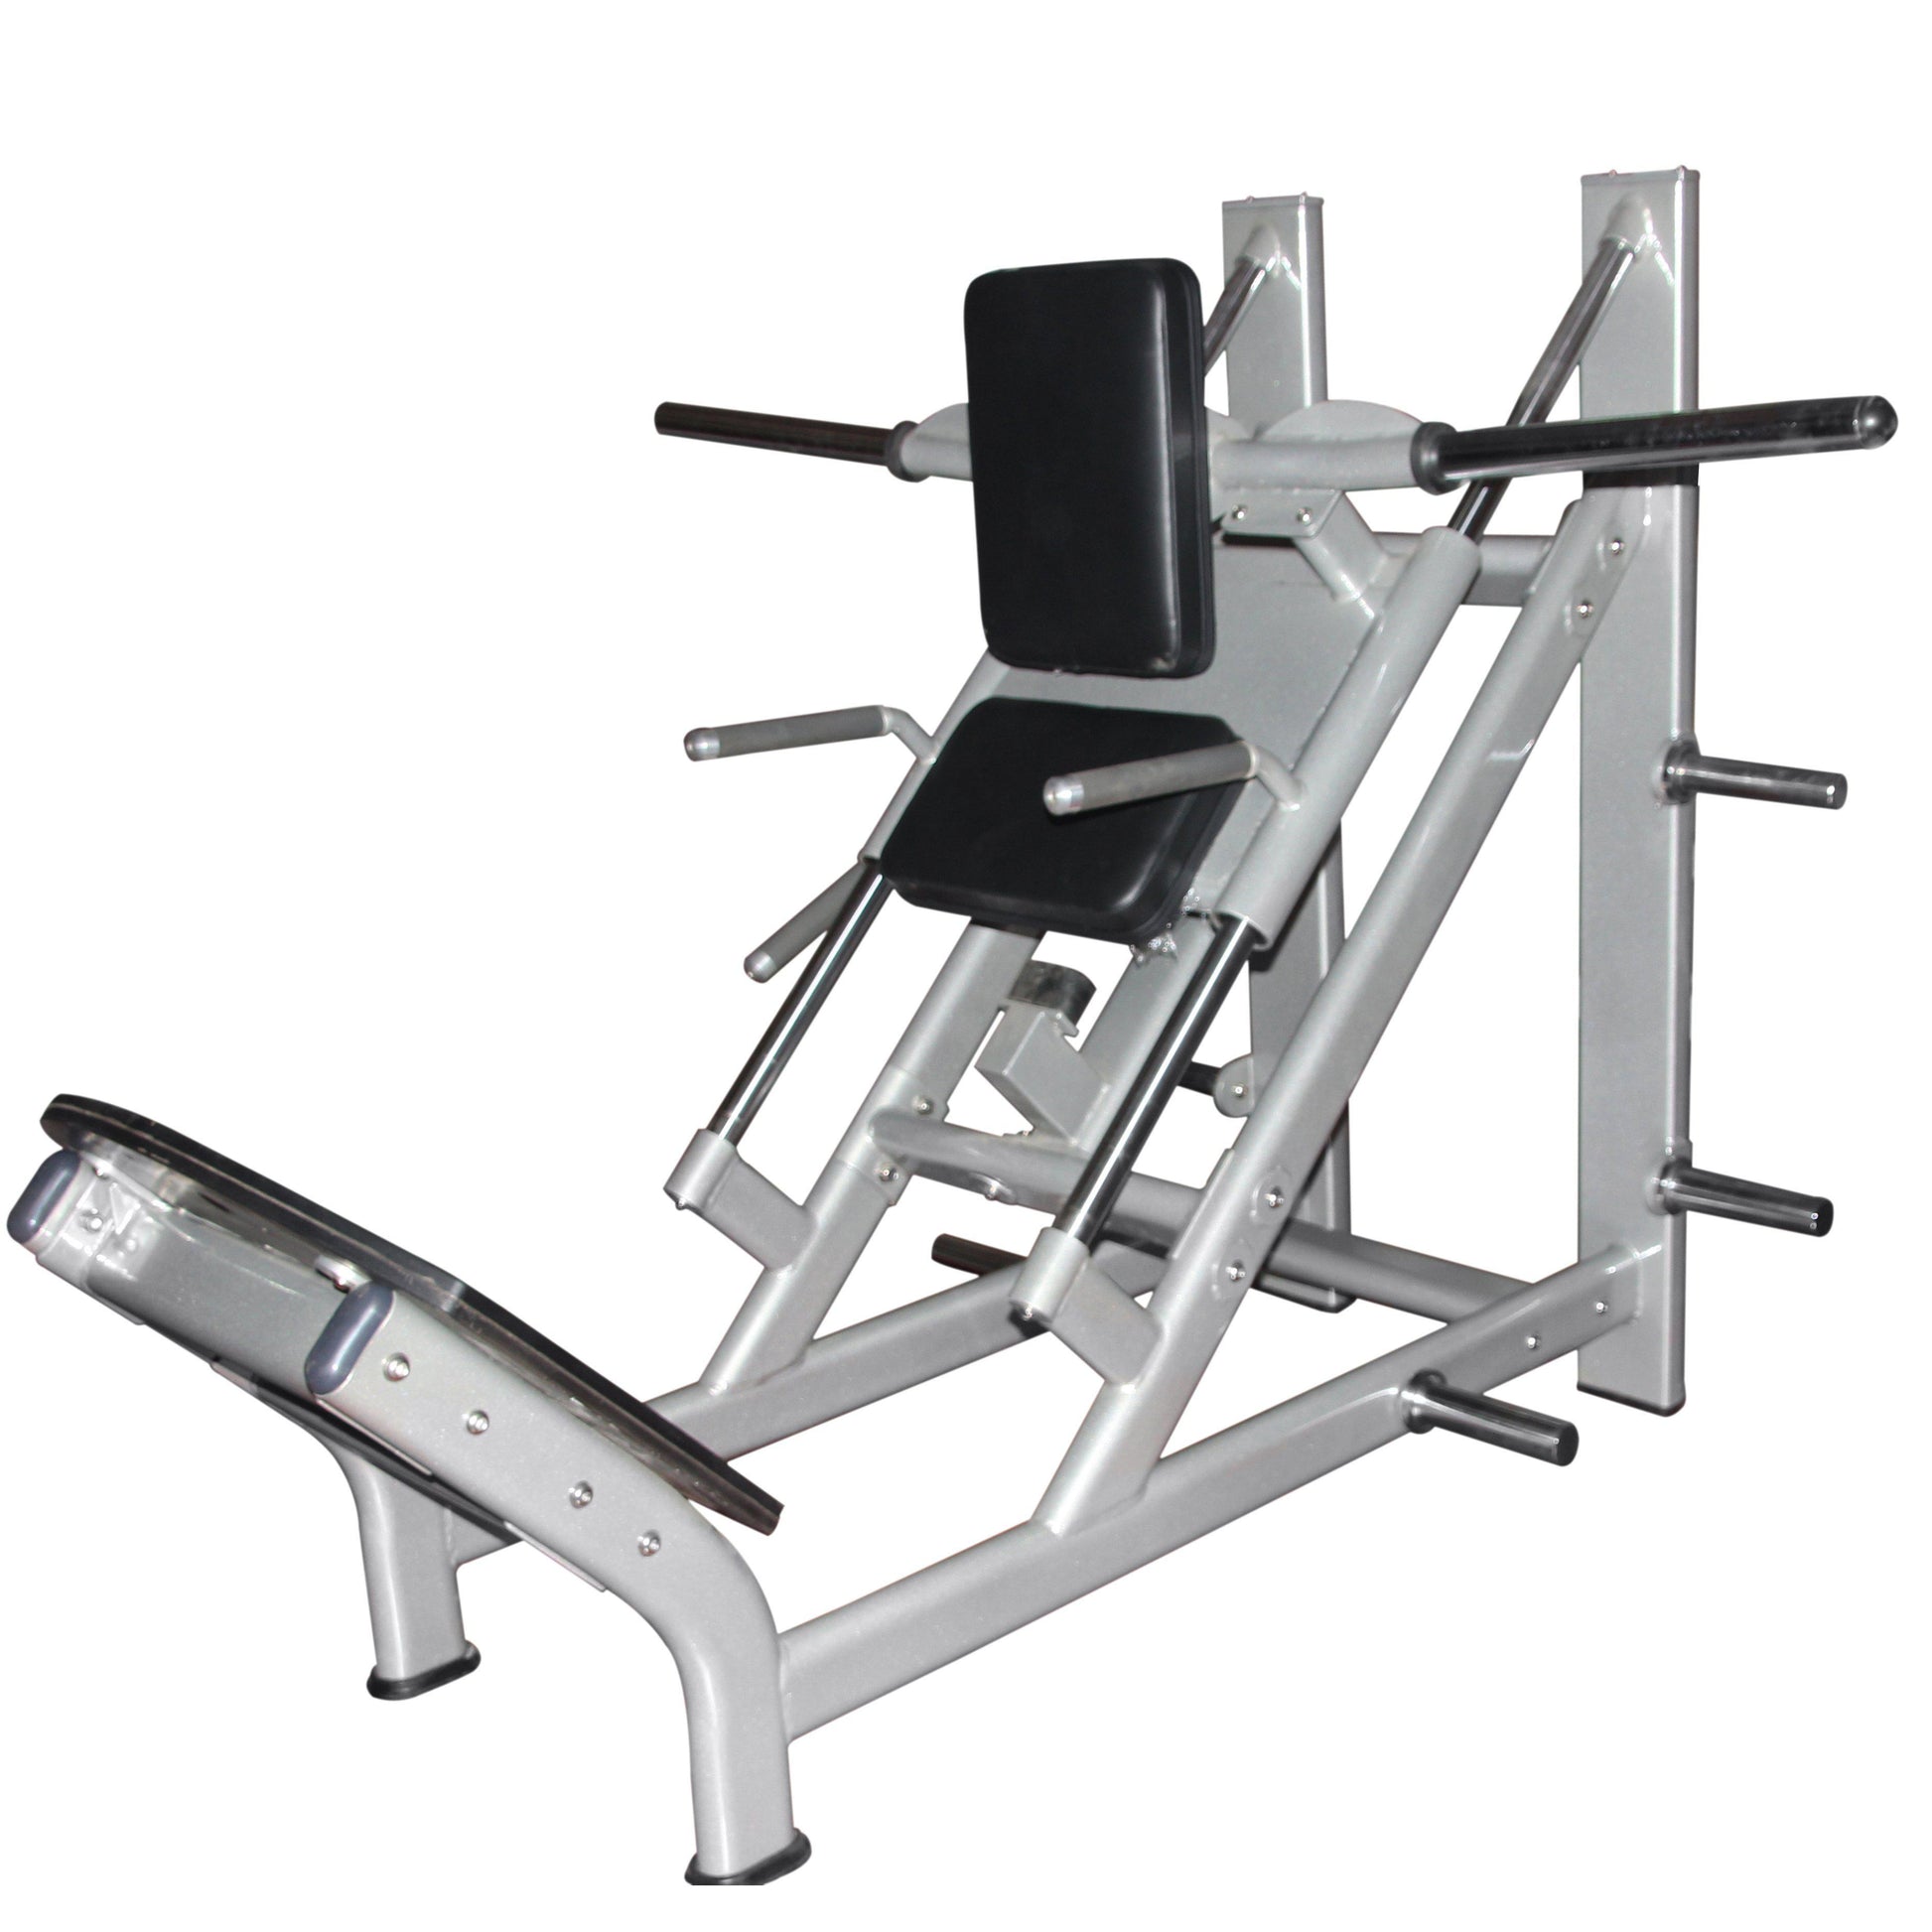 Commercial 45 Degree Leg Press - XRFM Series | Gym Direct-Commercial Hack Squat-Gym Direct